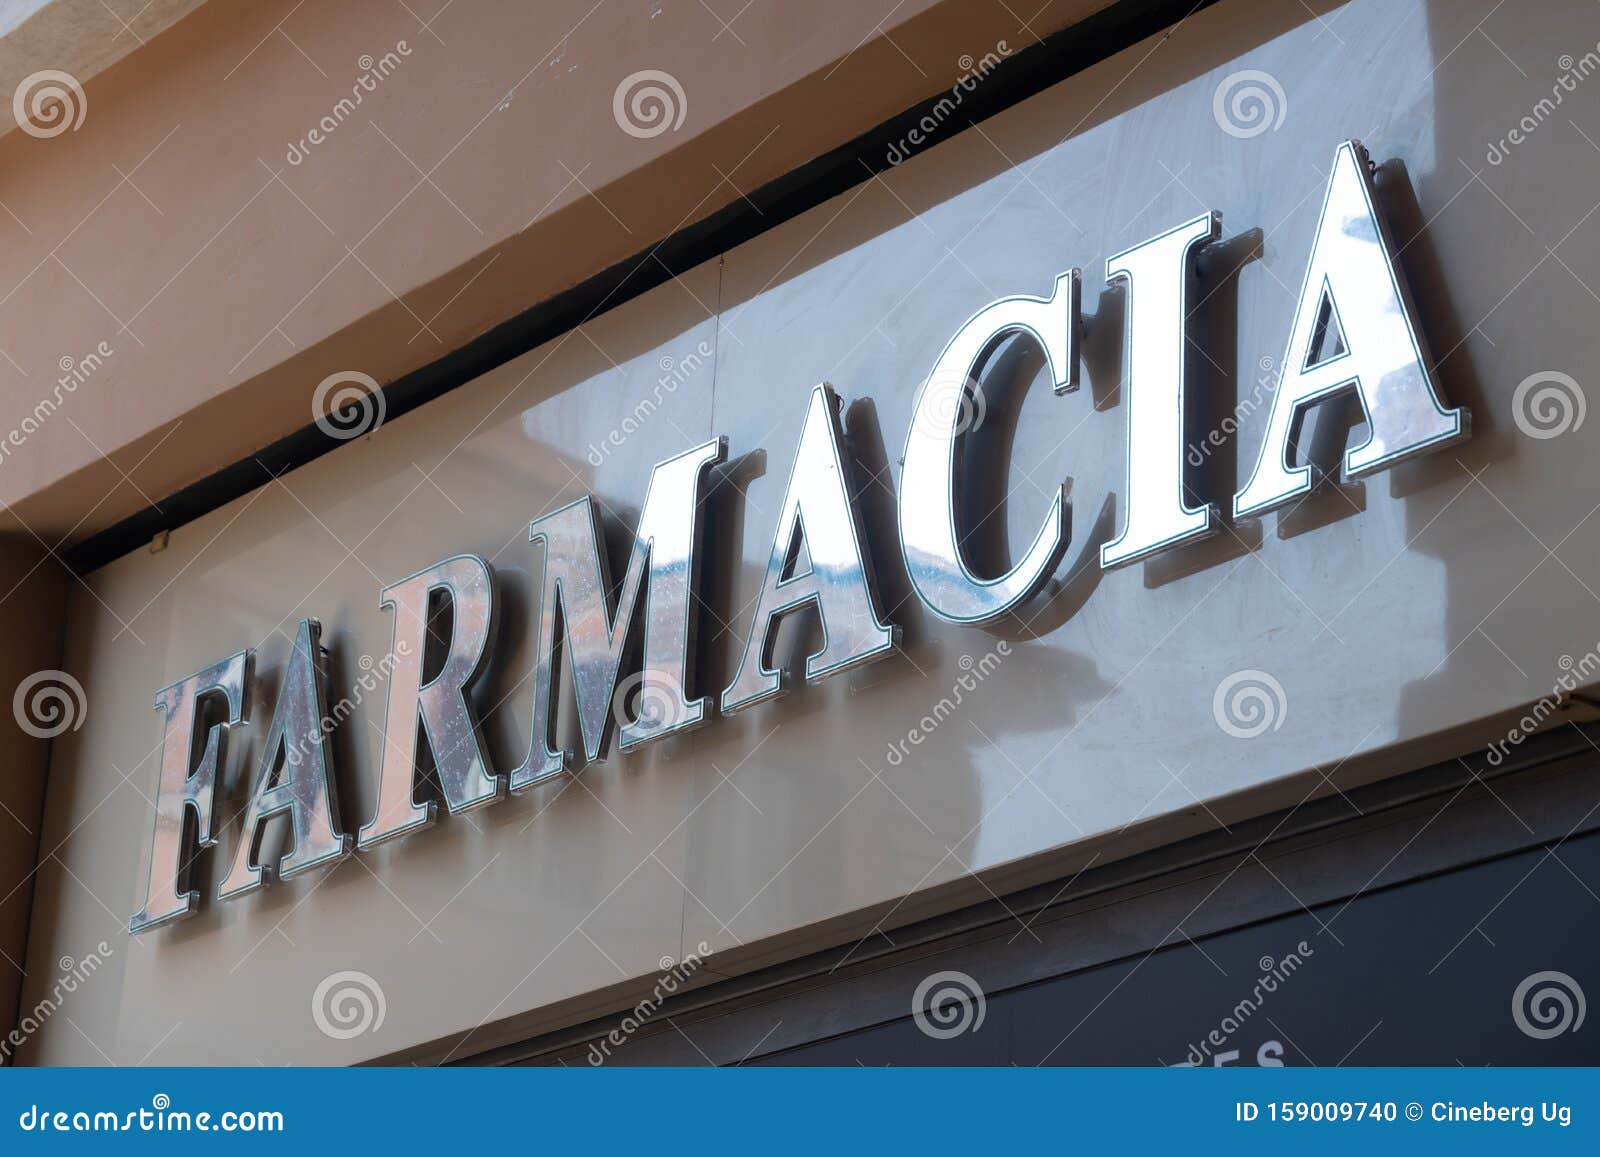 italian pharmacy store sign